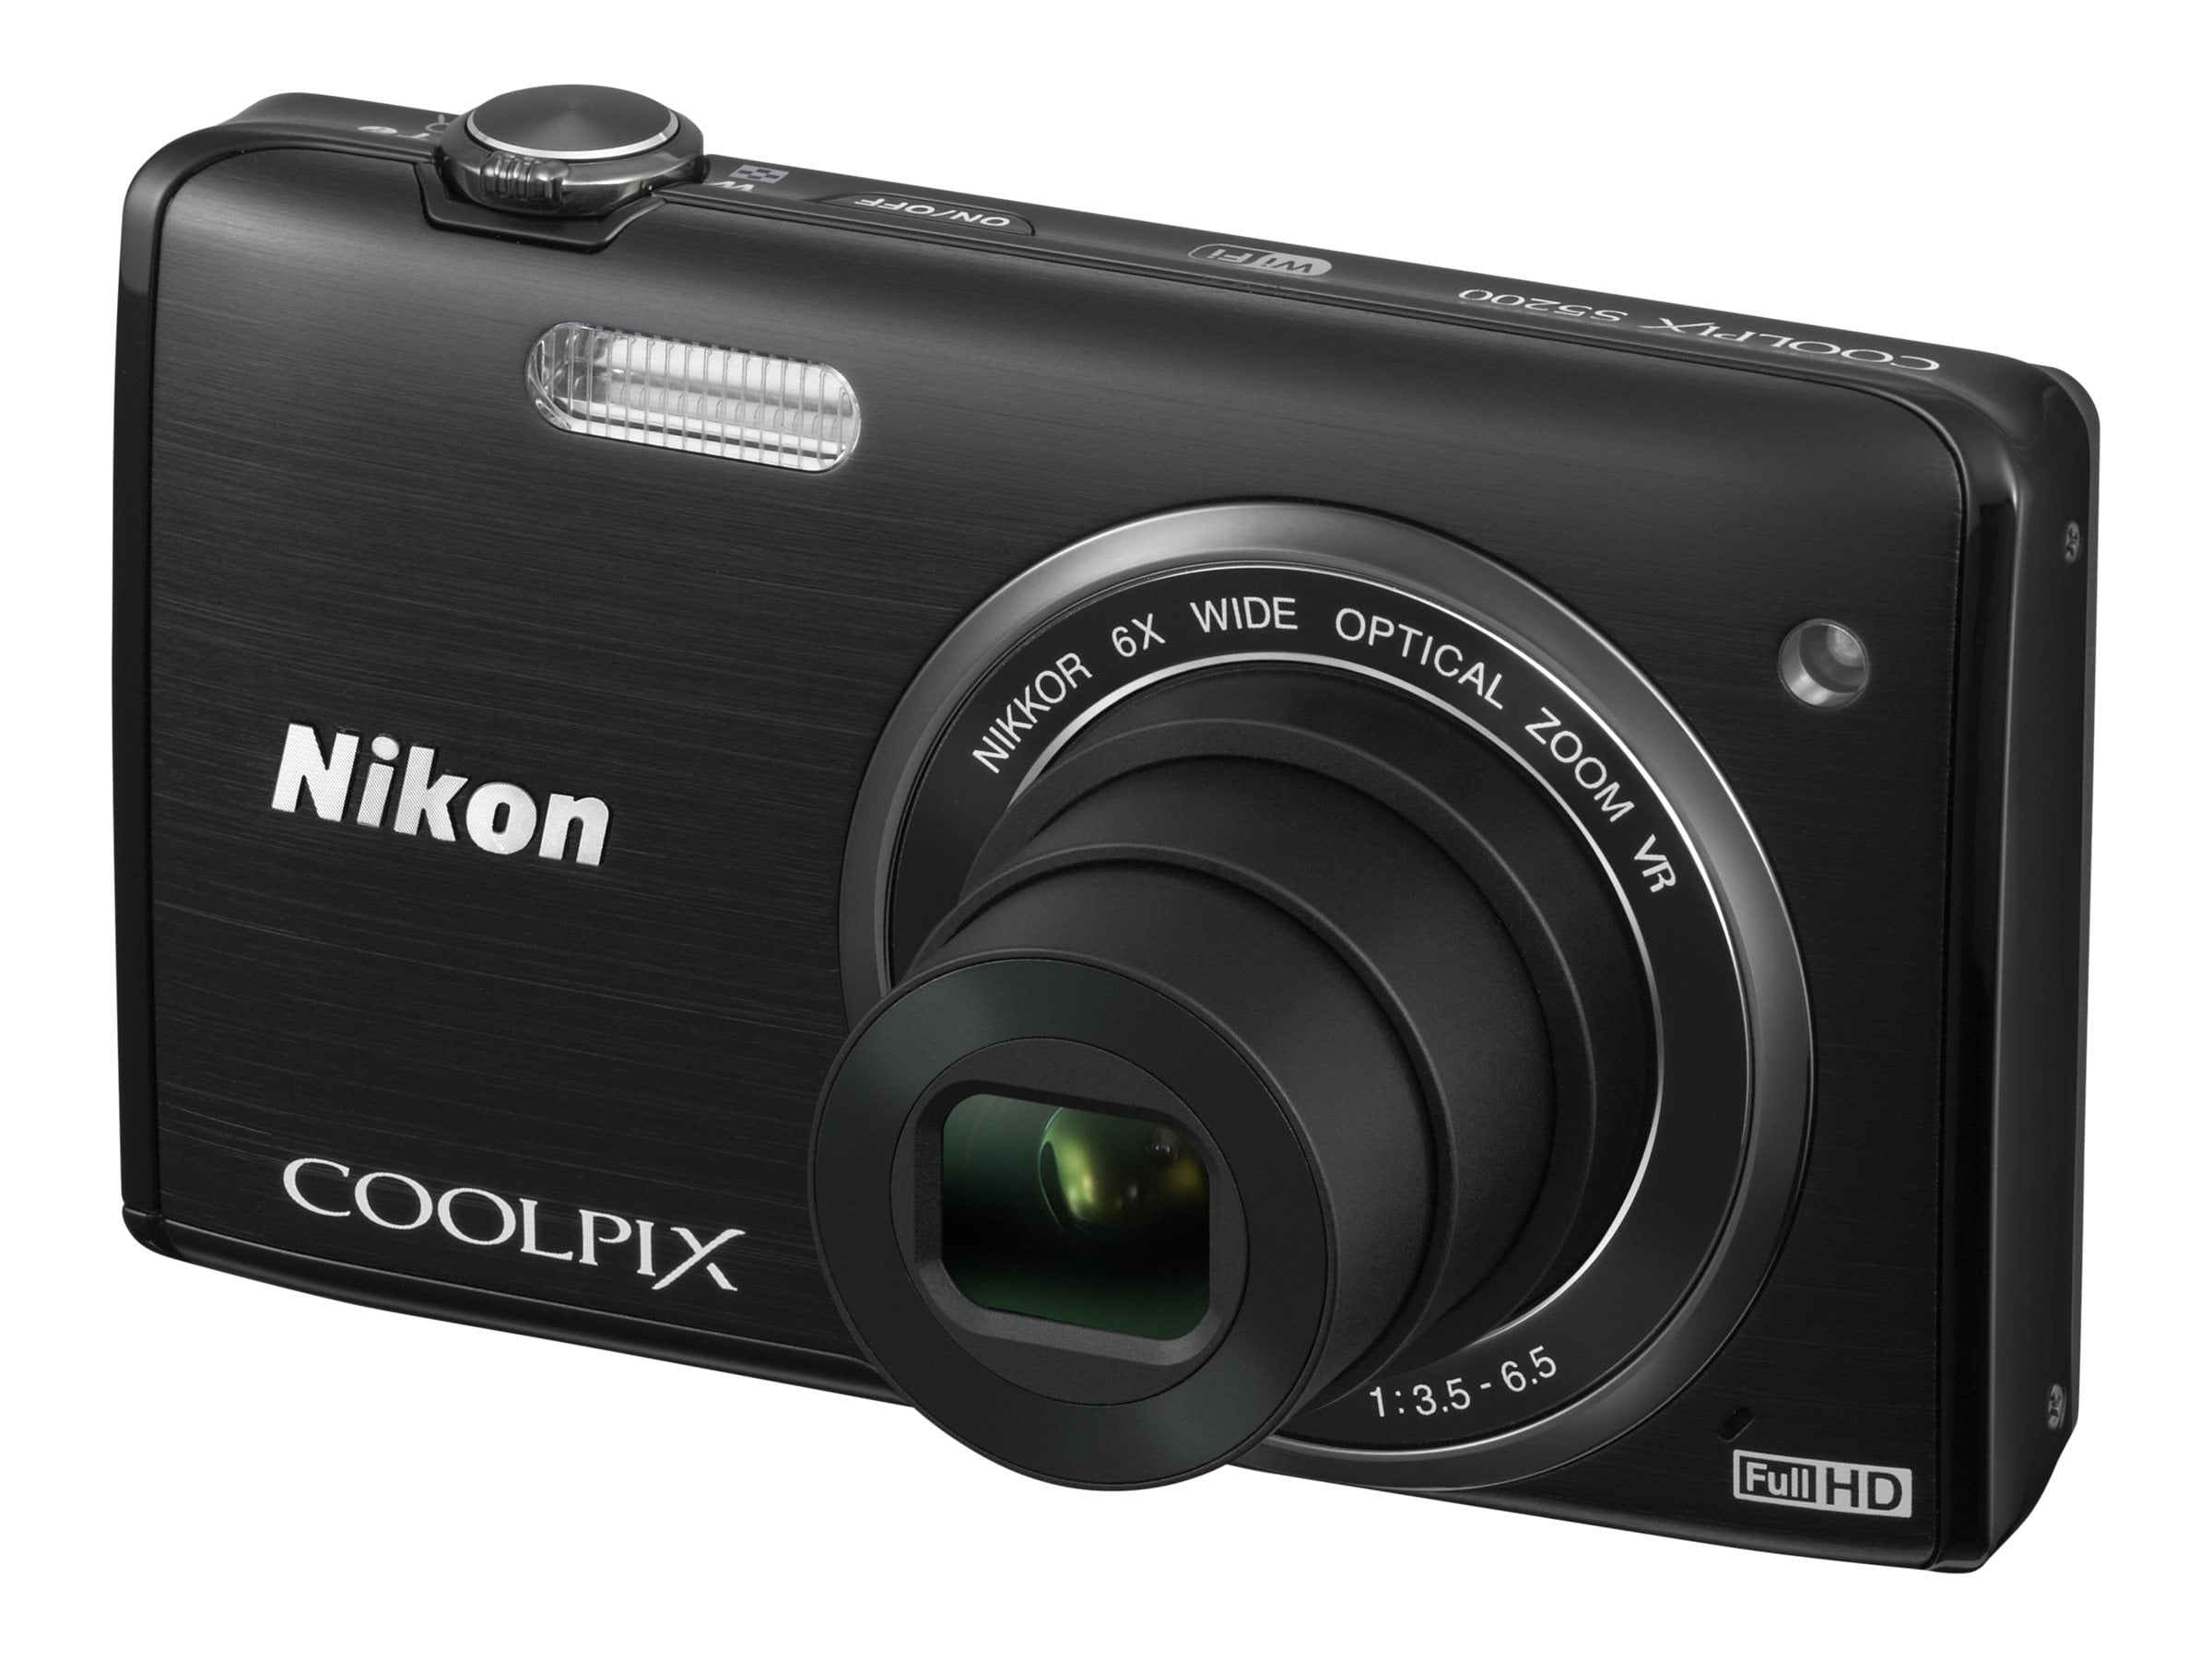 Nikon COOLPIX S5200 Digital Camera (Blue) 26376 B&H Photo Video